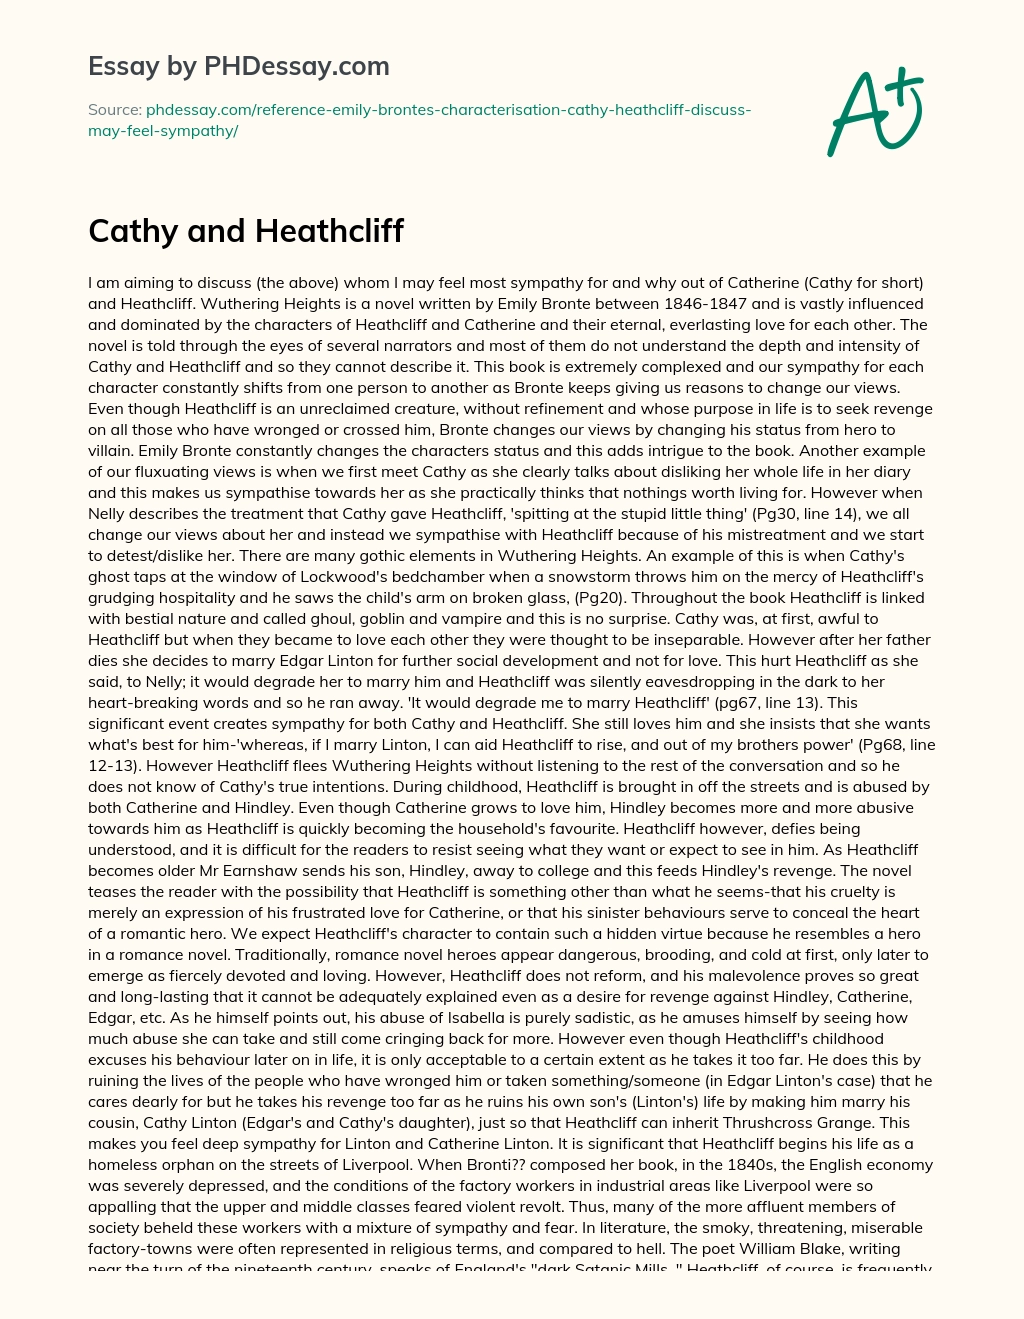 Cathy and Heathcliff essay